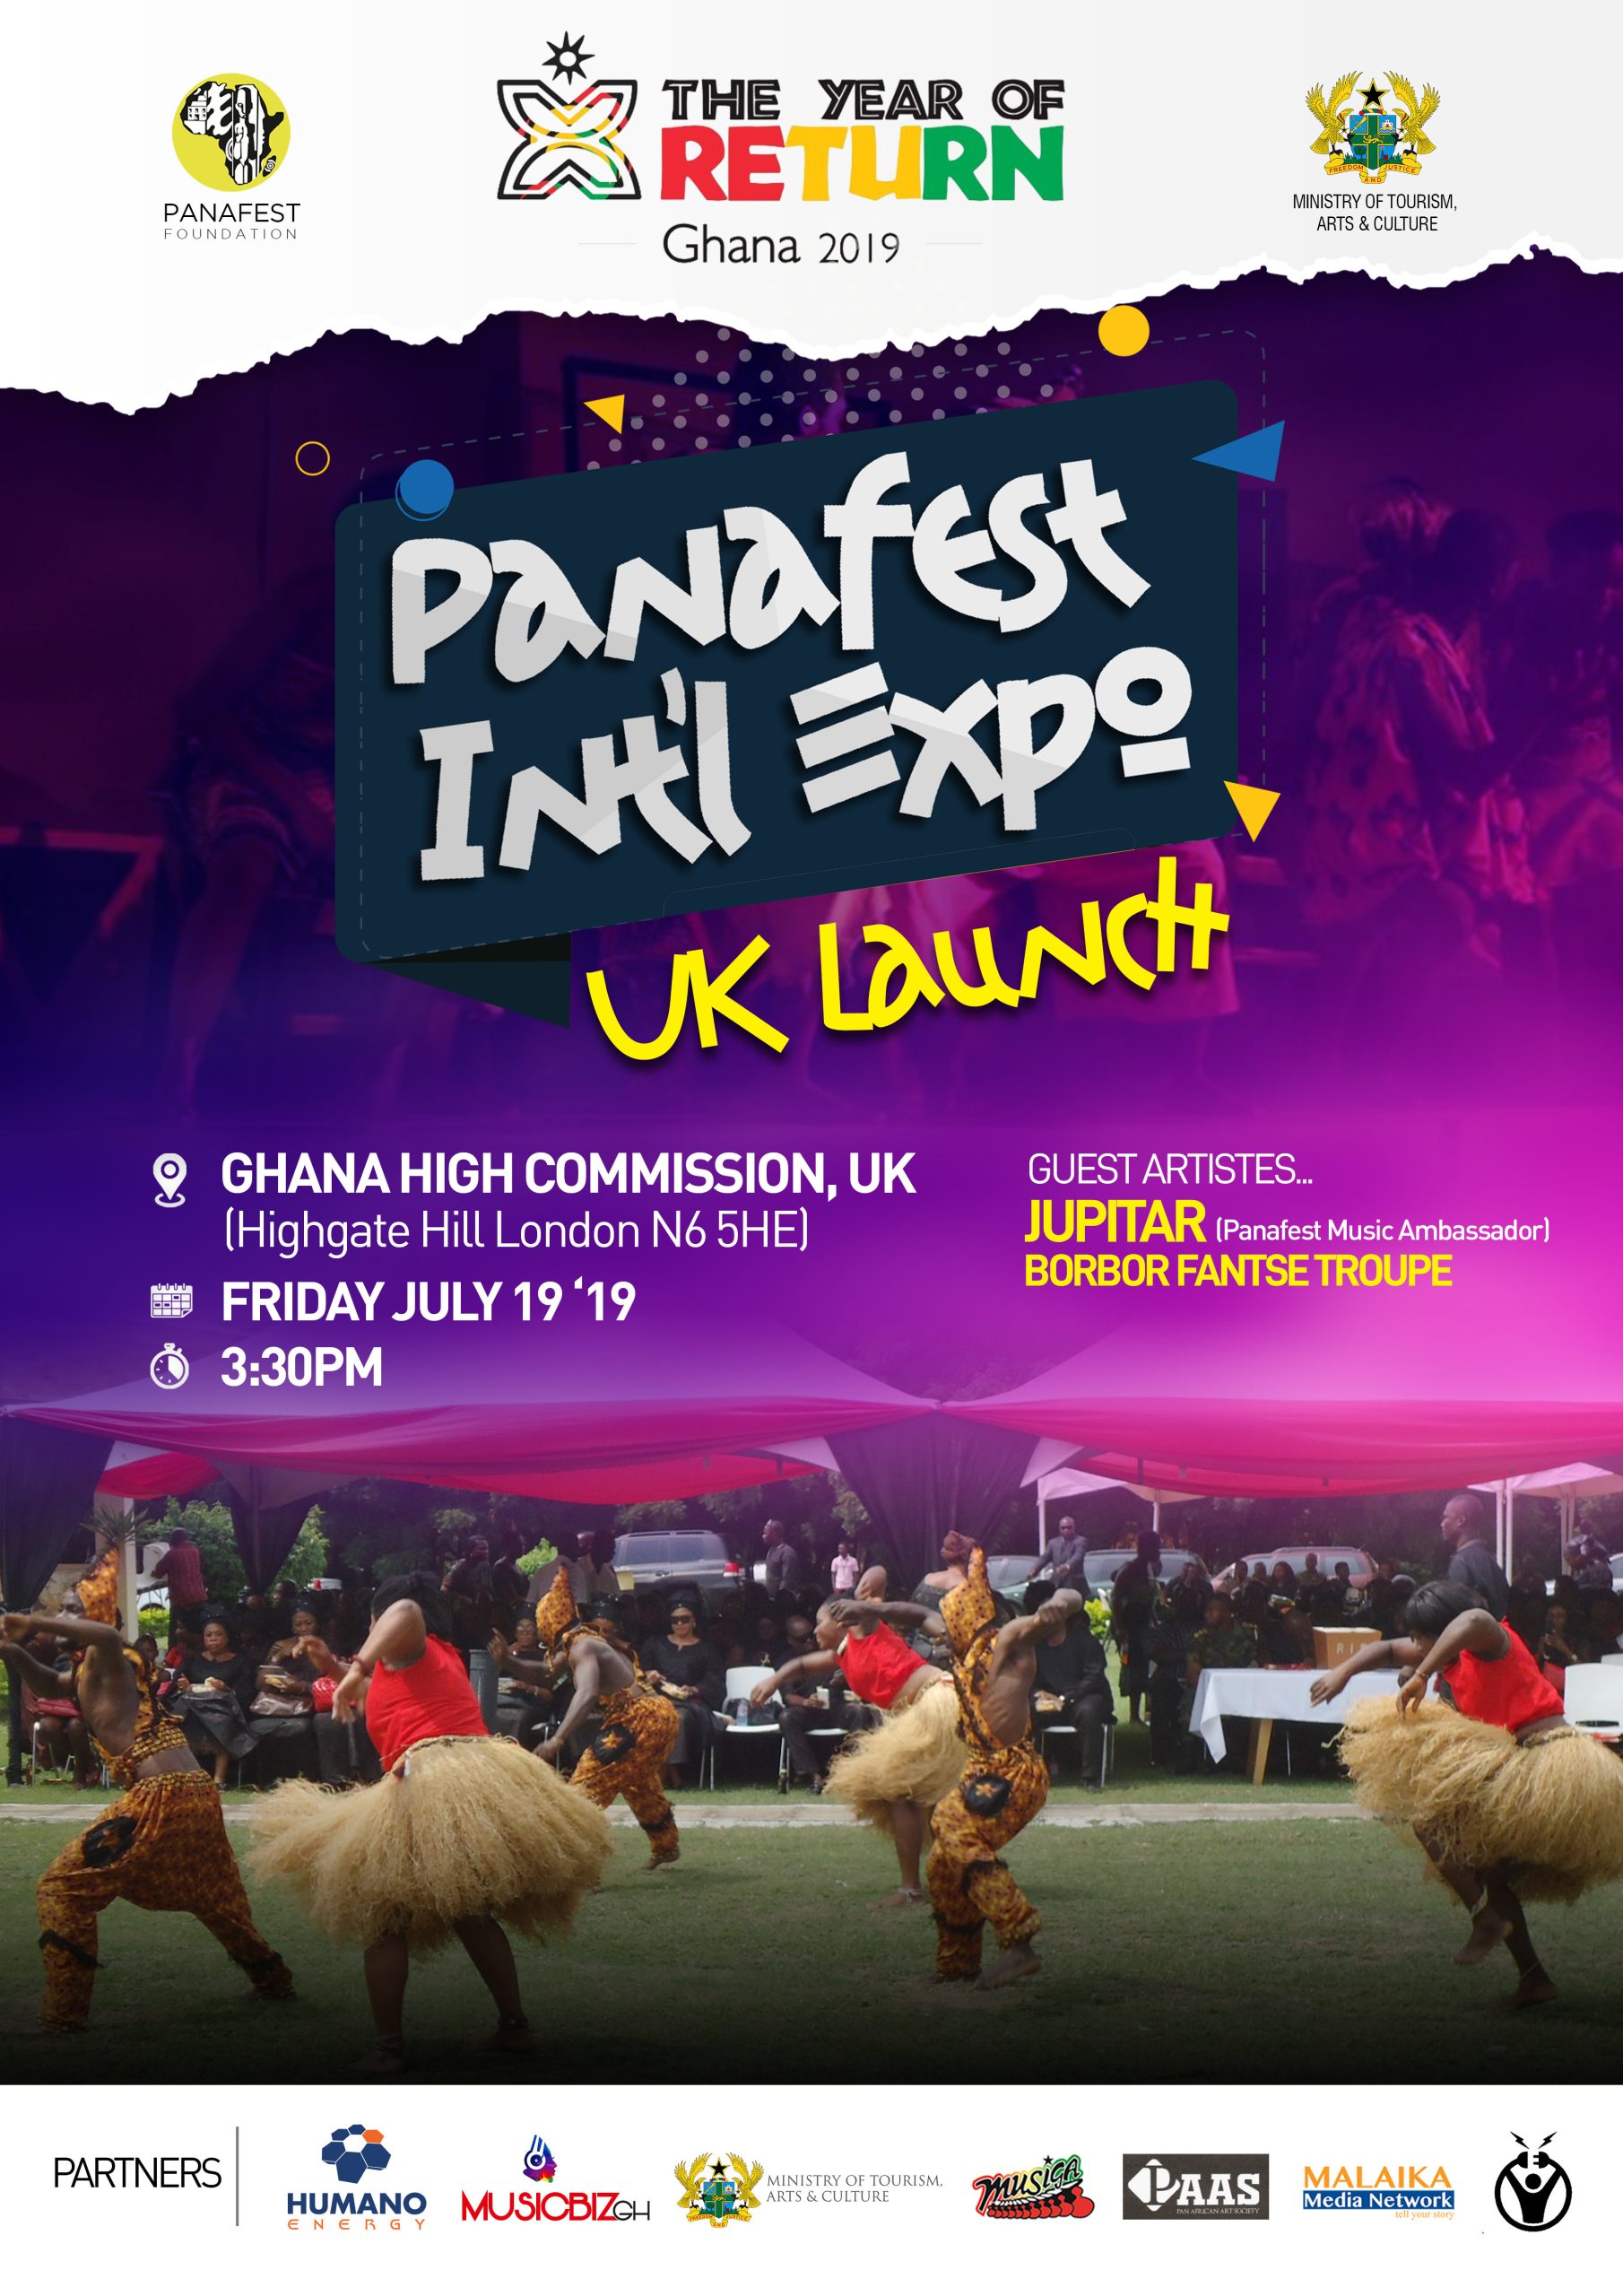 PANAFEST International Expo UK